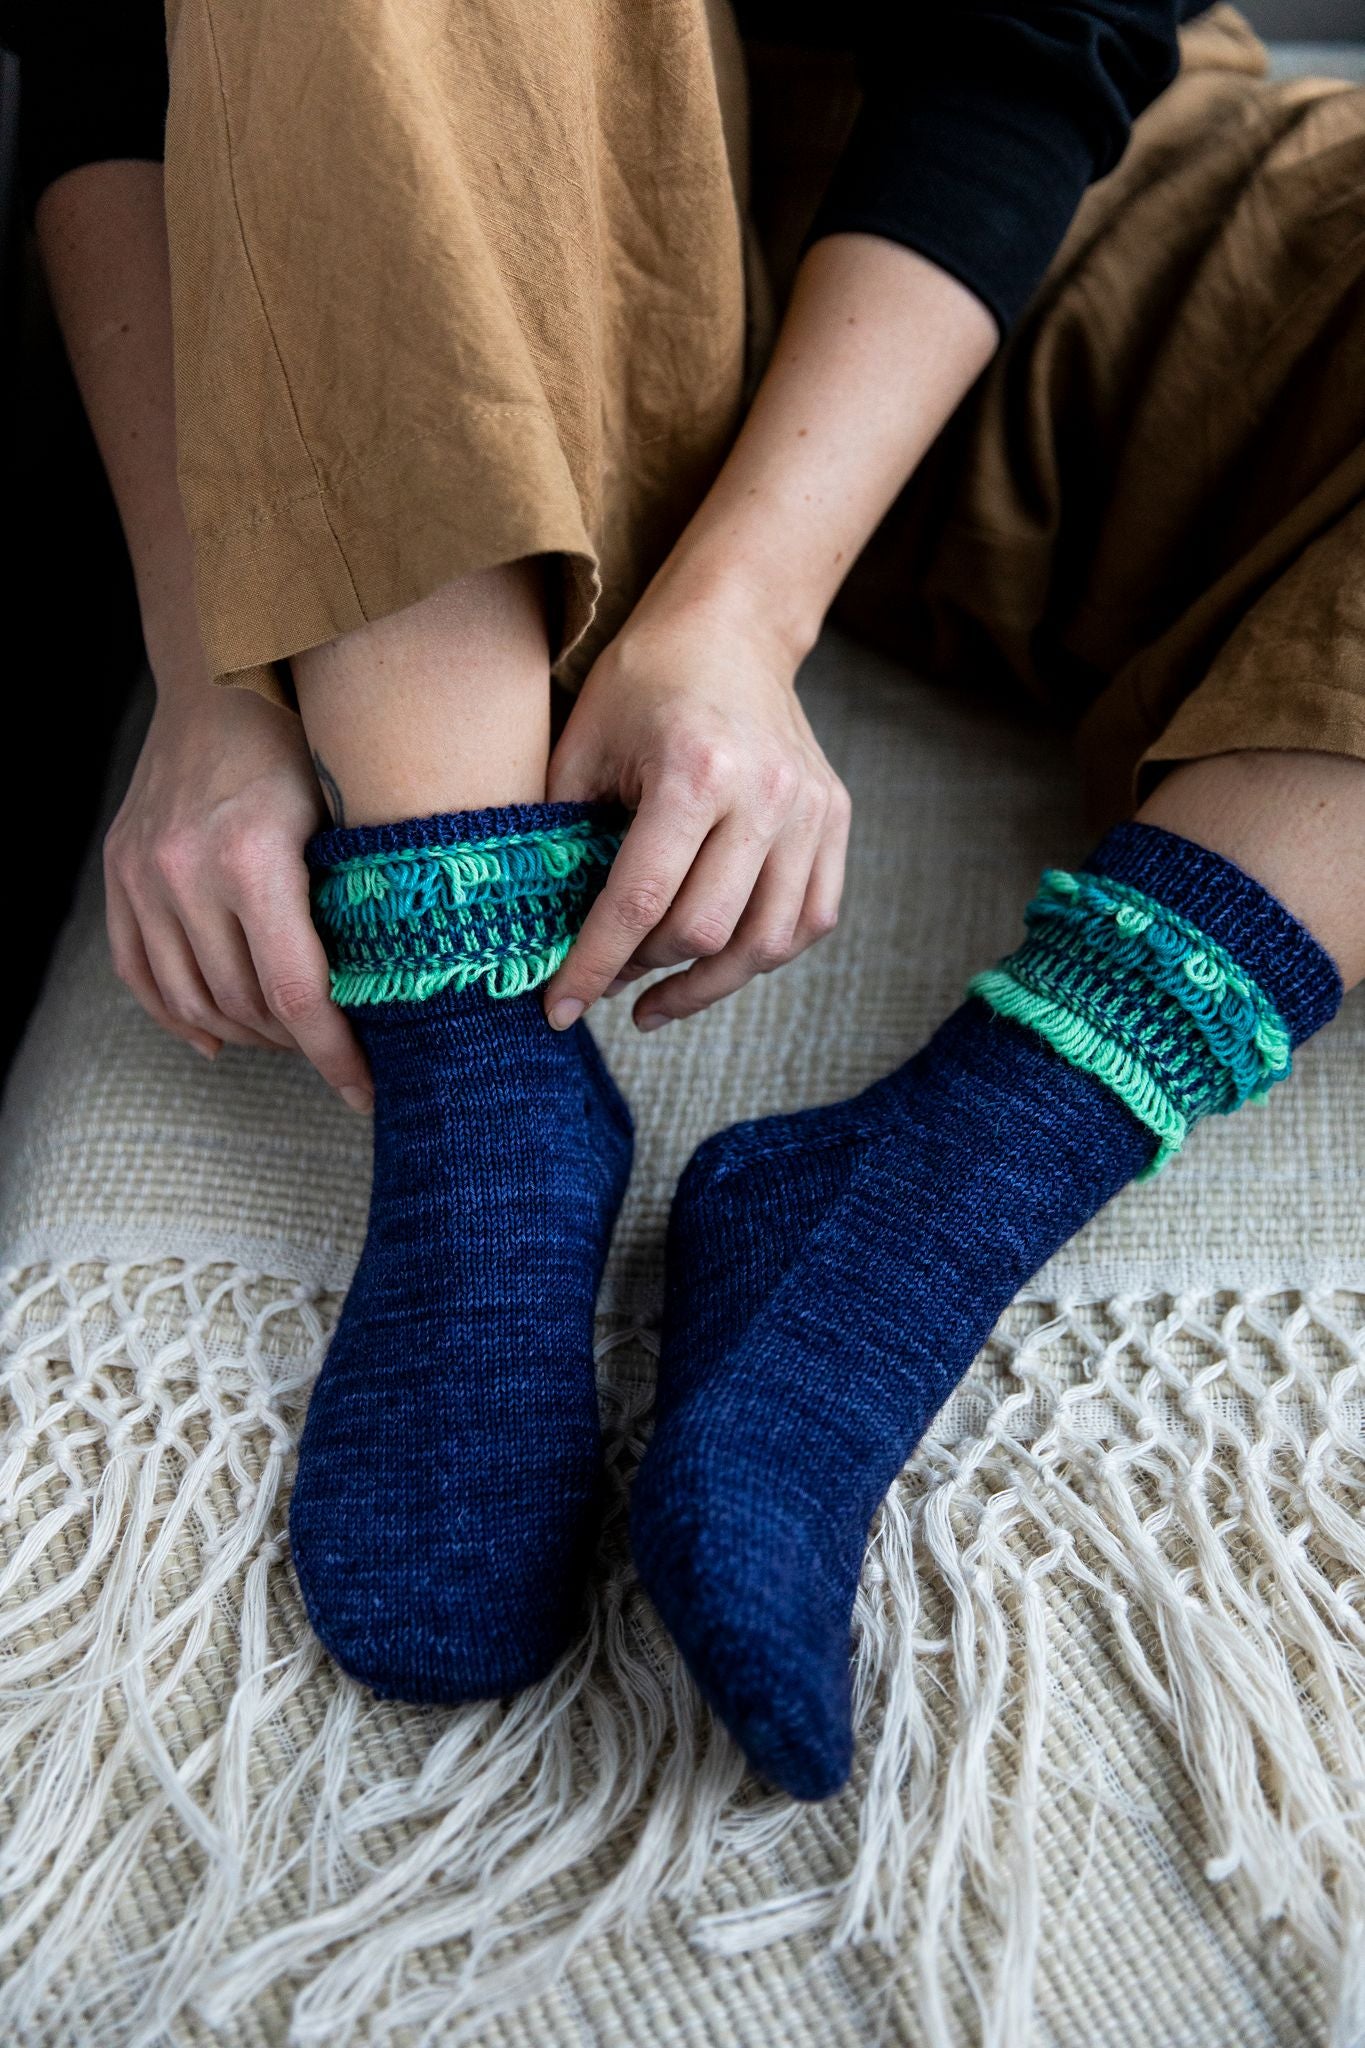 52 Weeks of Socks Vol. II by Laine - Ritual Dyes